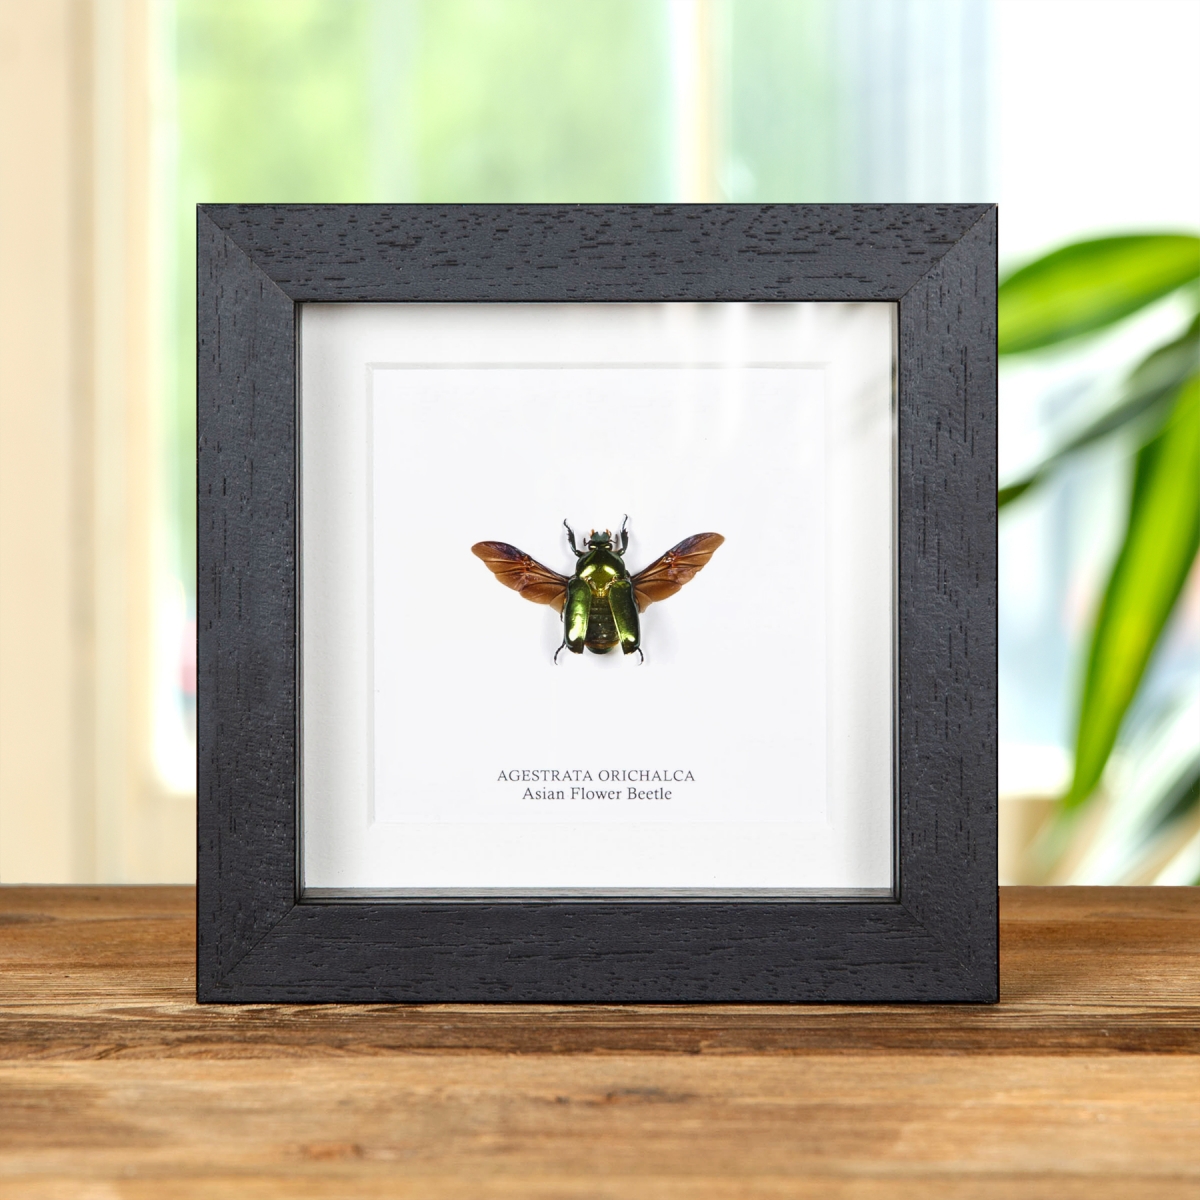 Minibeast Asian Flower Beetle In Box Frame (Agestrata orichalca)